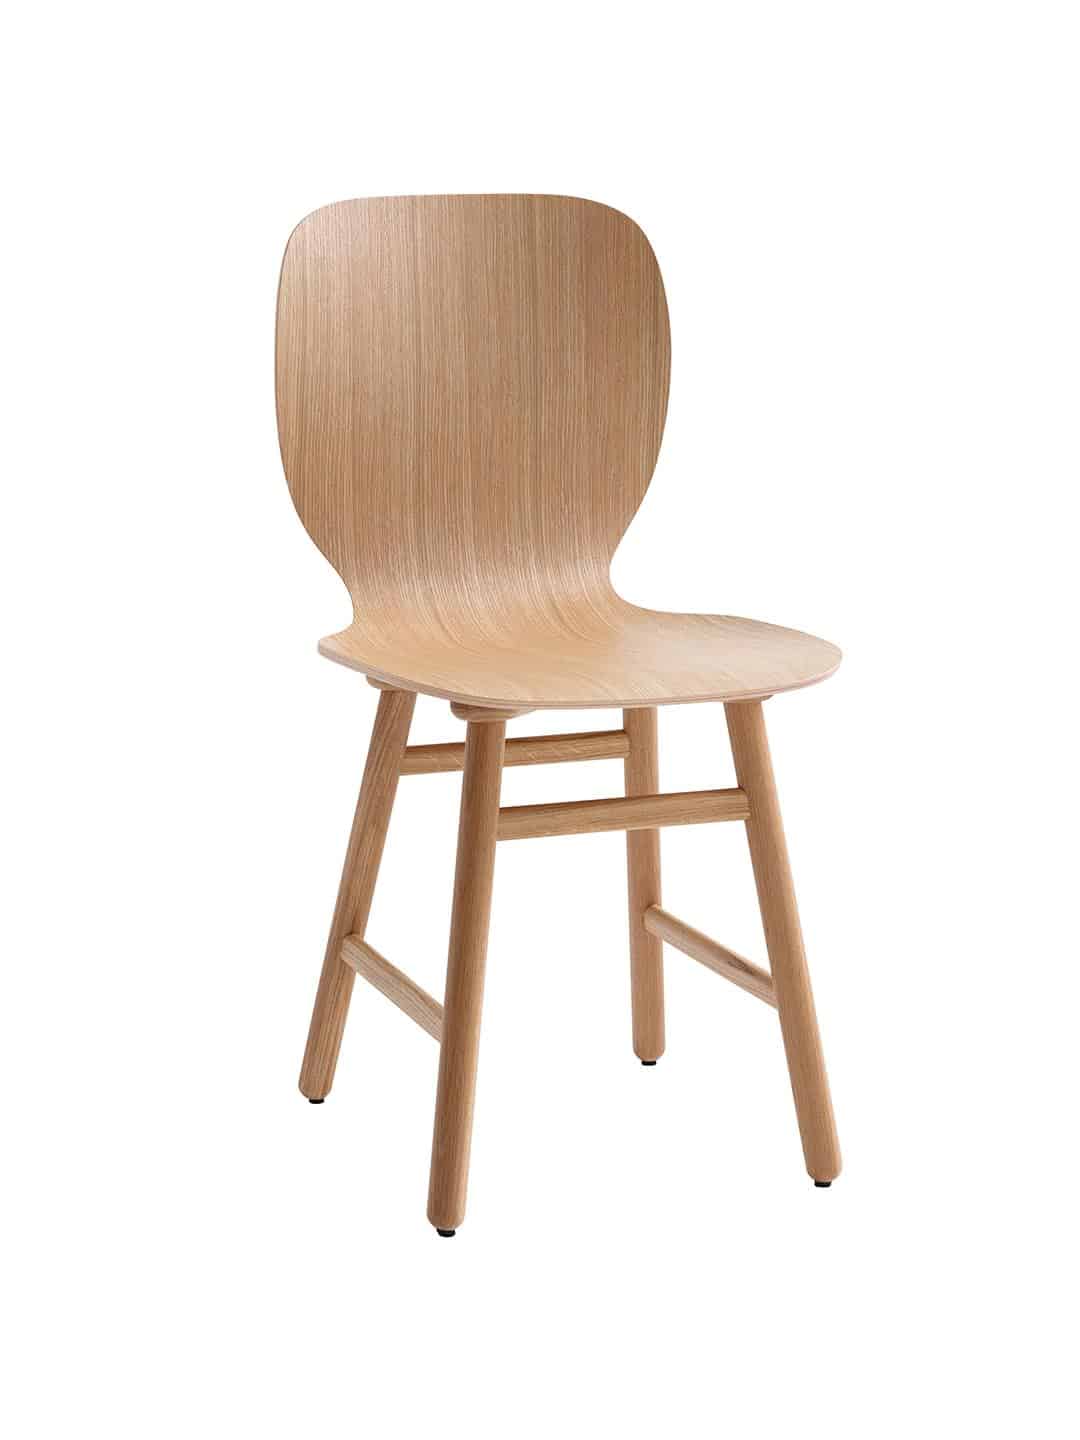 Стильный стул Karl Andersson Shell из натурального дуба